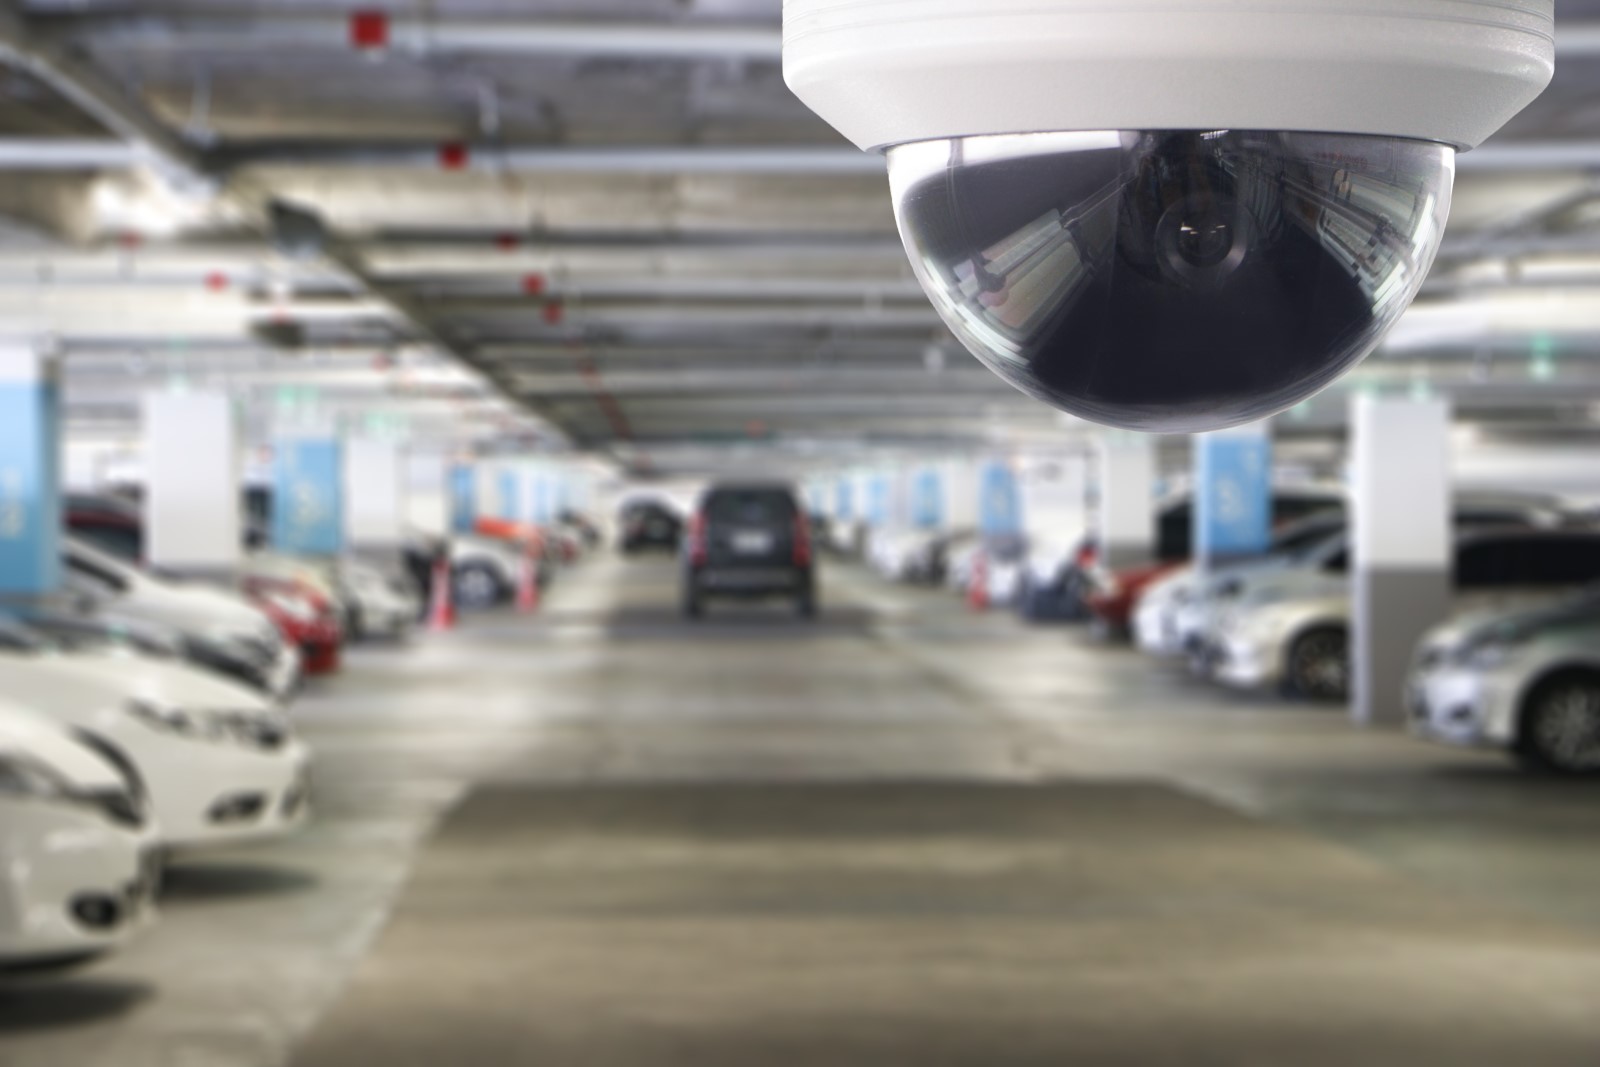 surveillance security camera in a parking garage.